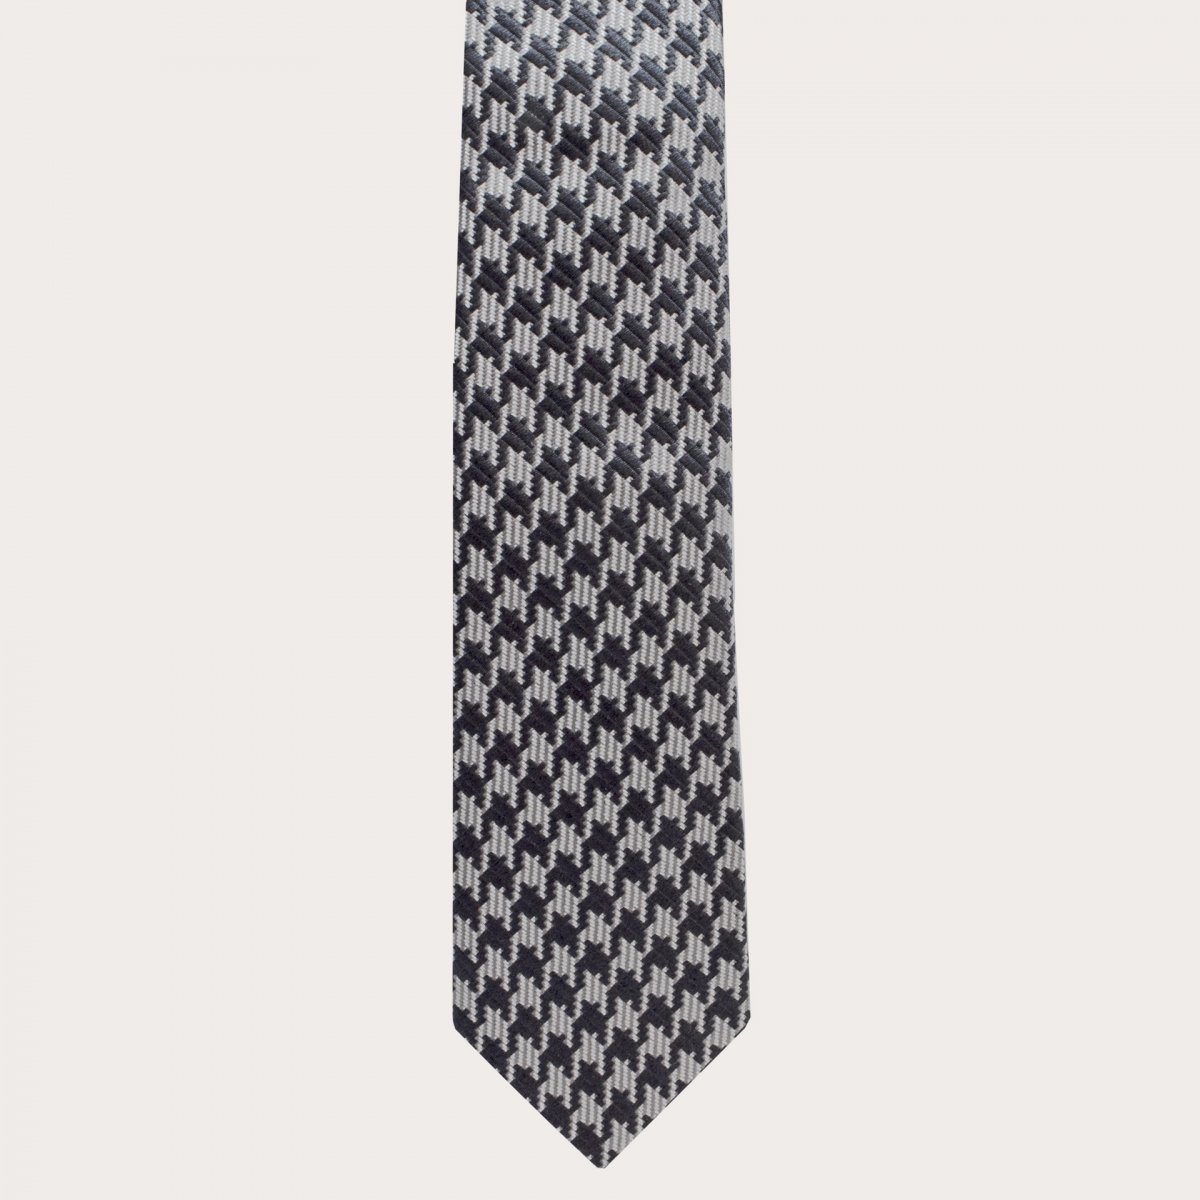 Cravatta pied de poule nera in seta